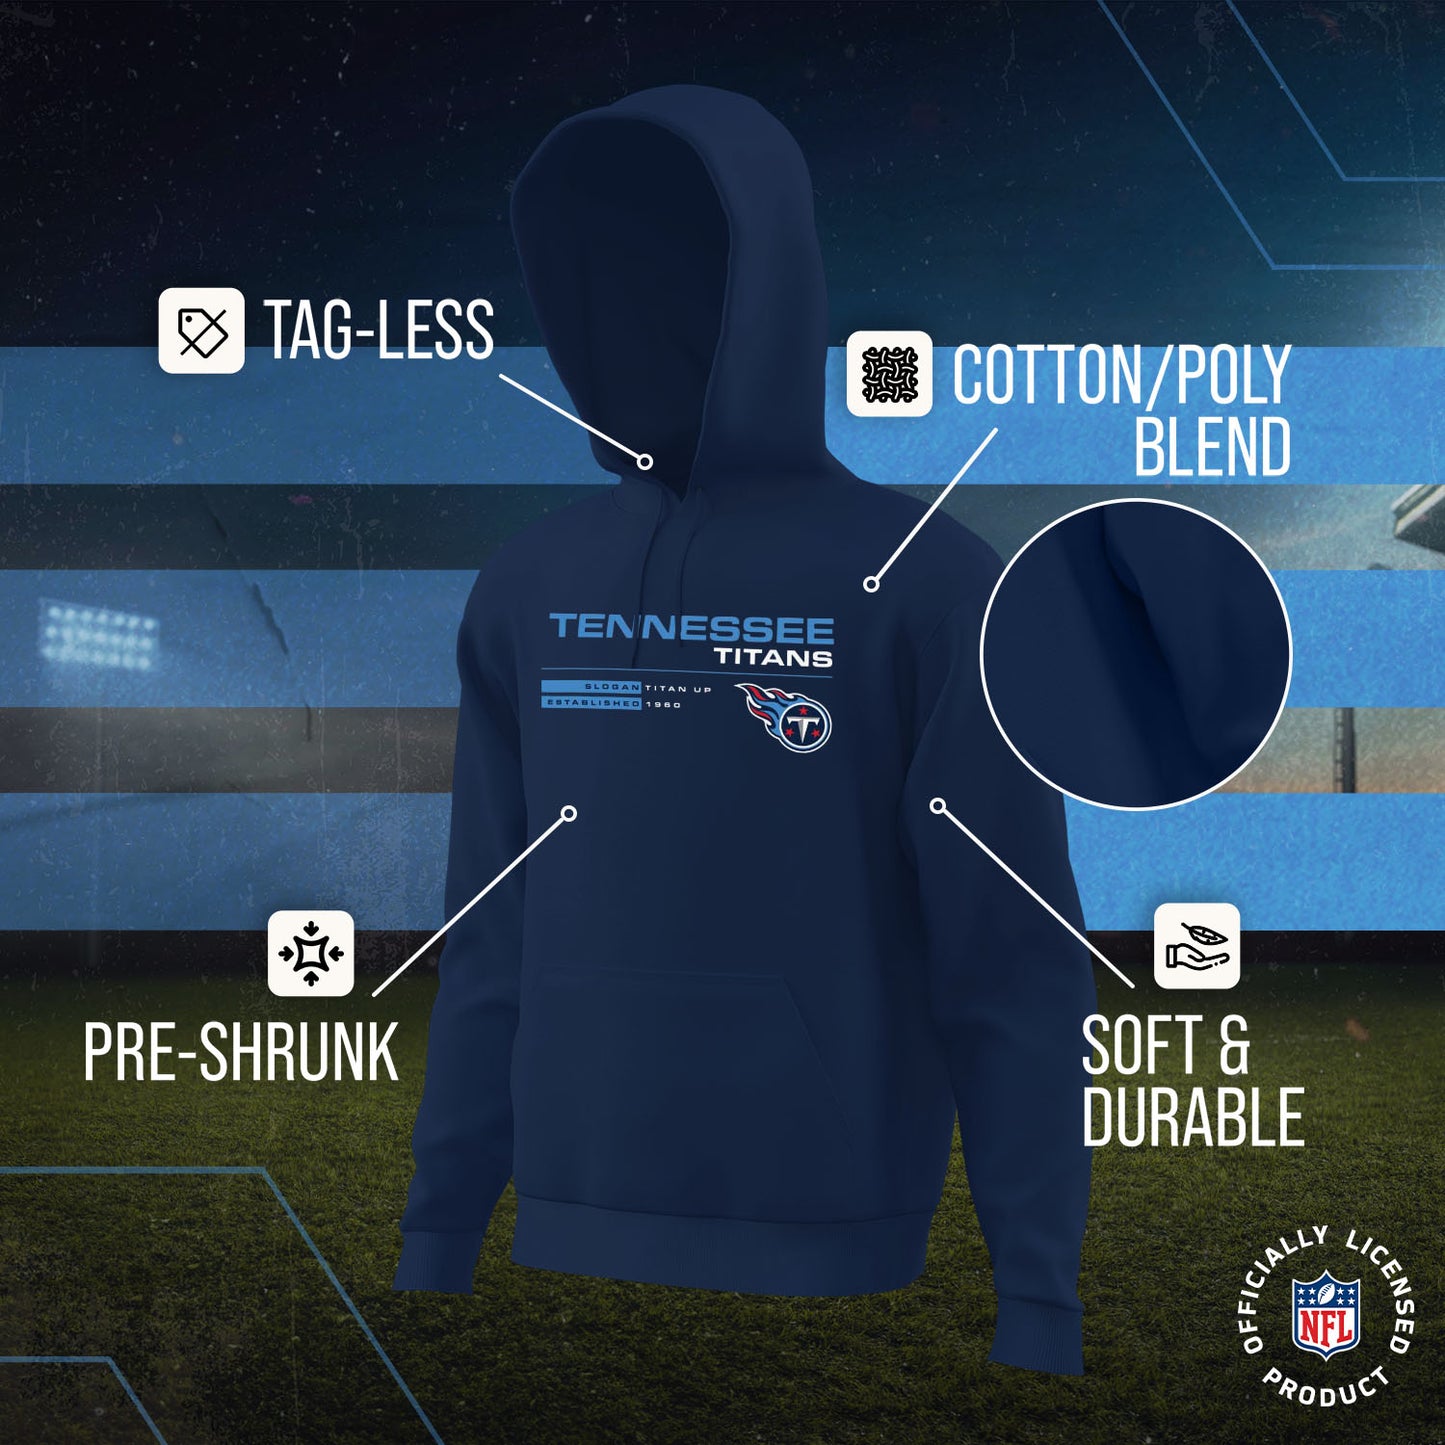 Tennessee Titans Adult NFL Speed Stat Sheet Fleece Hooded Sweatshirt - Navy